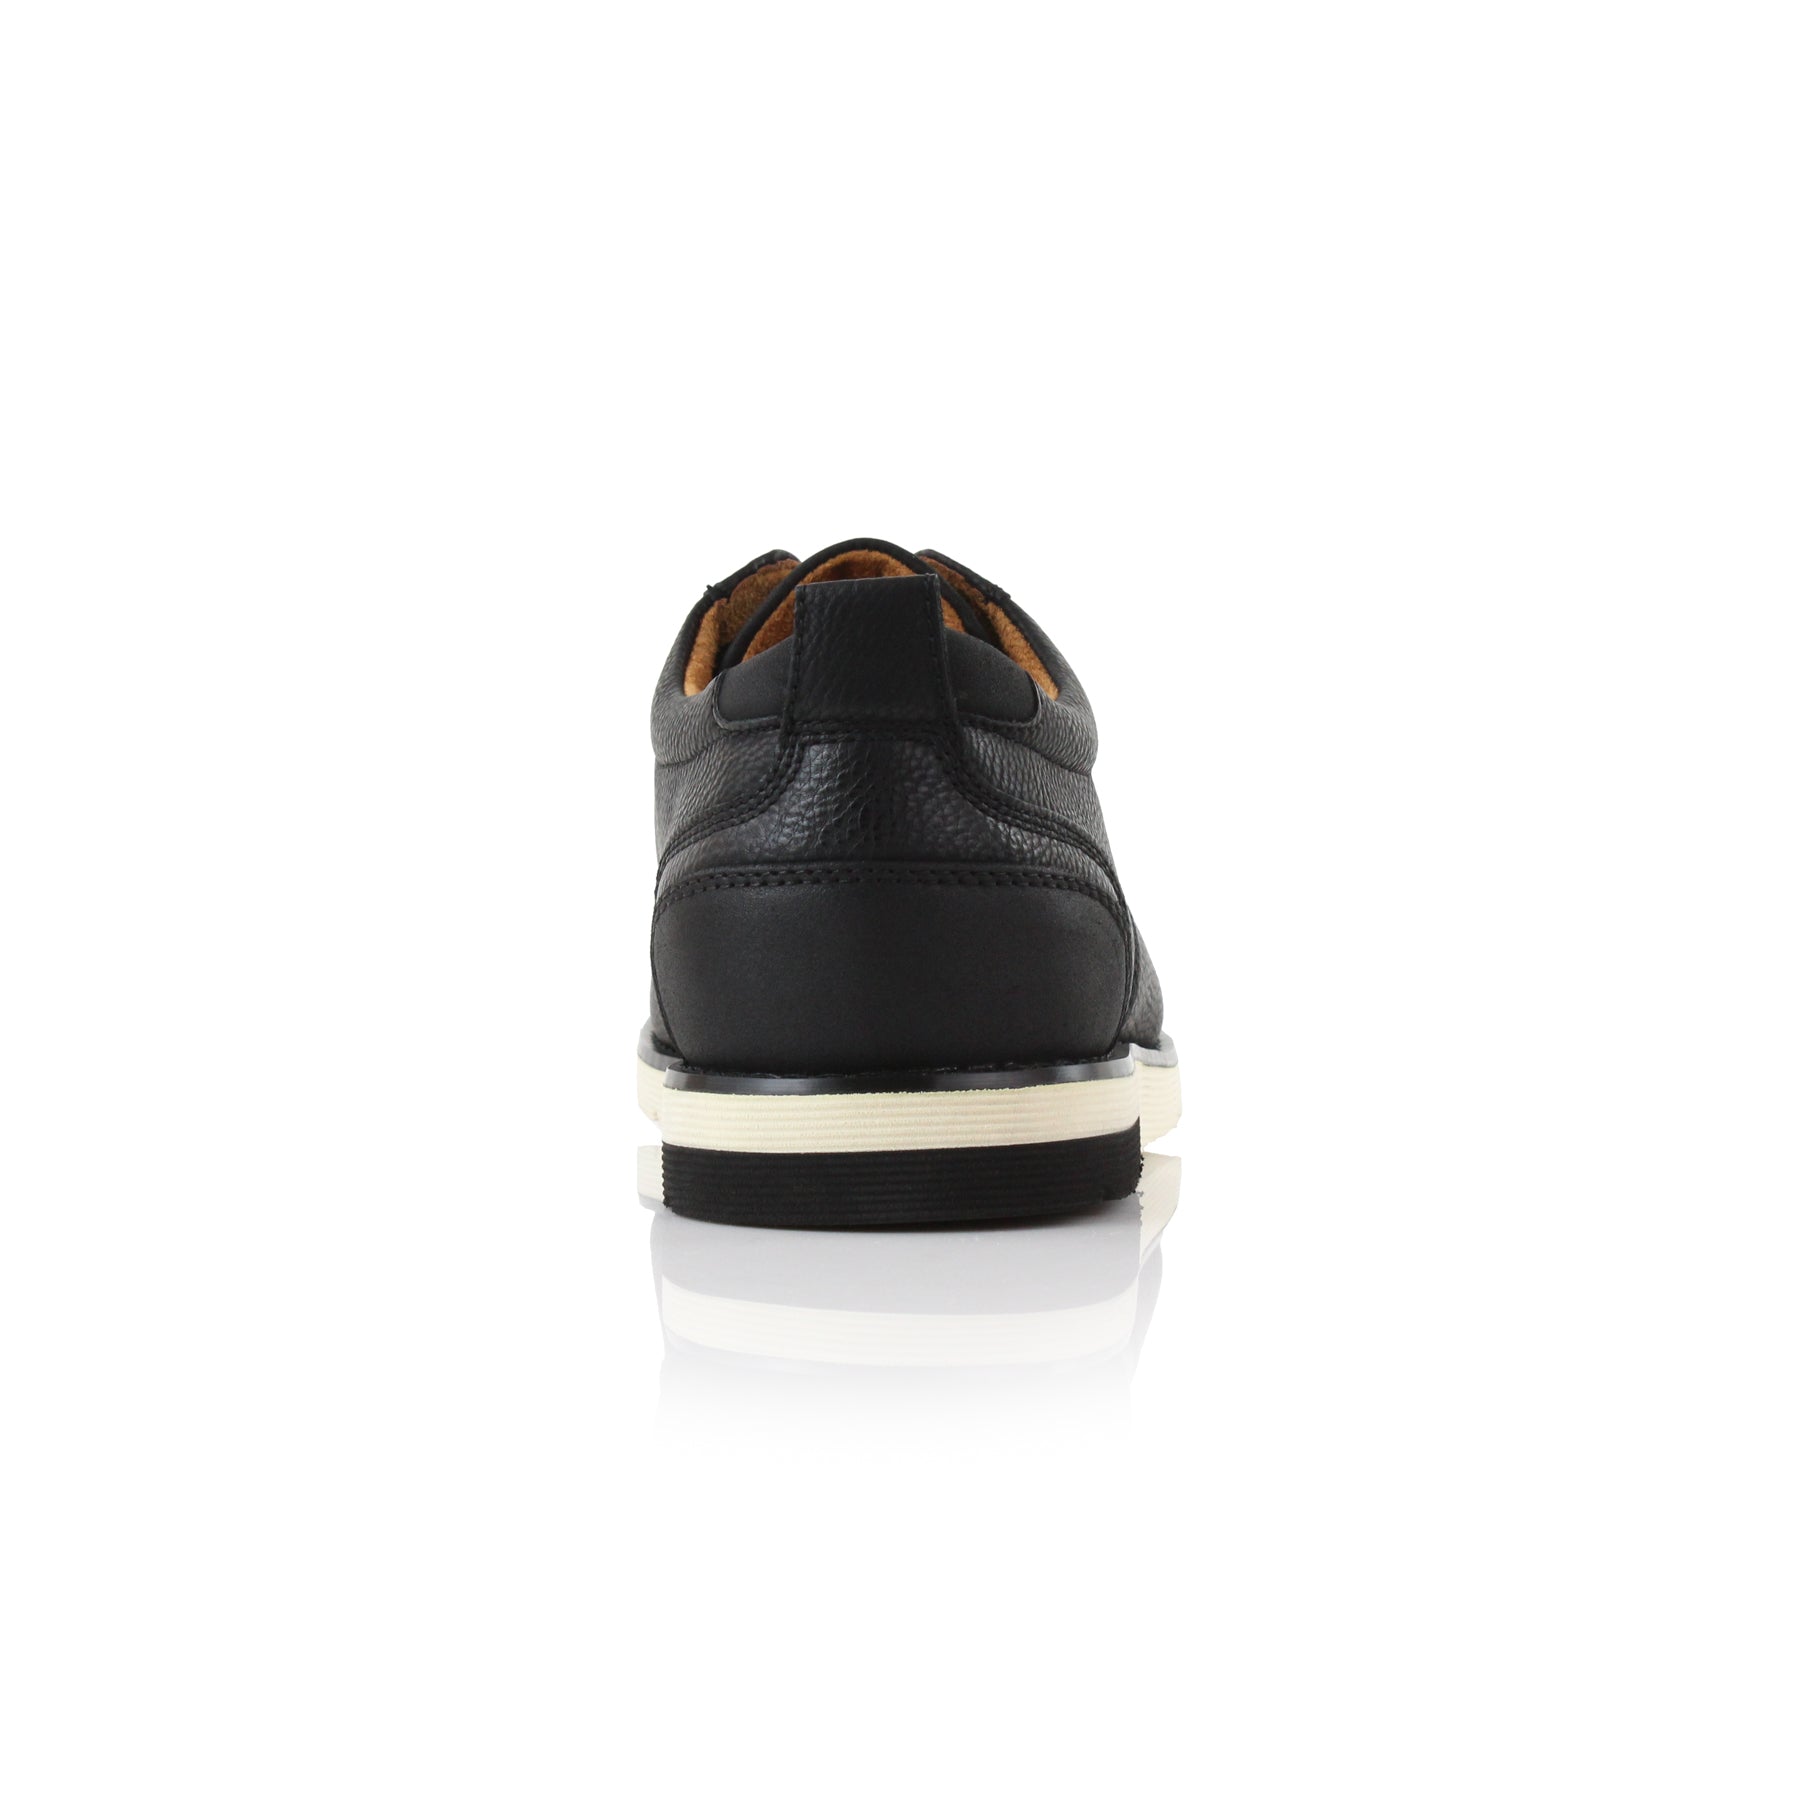 Grained Leather Sneakers | Ayden by Ferro Aldo | Conal Footwear | Back Angle View